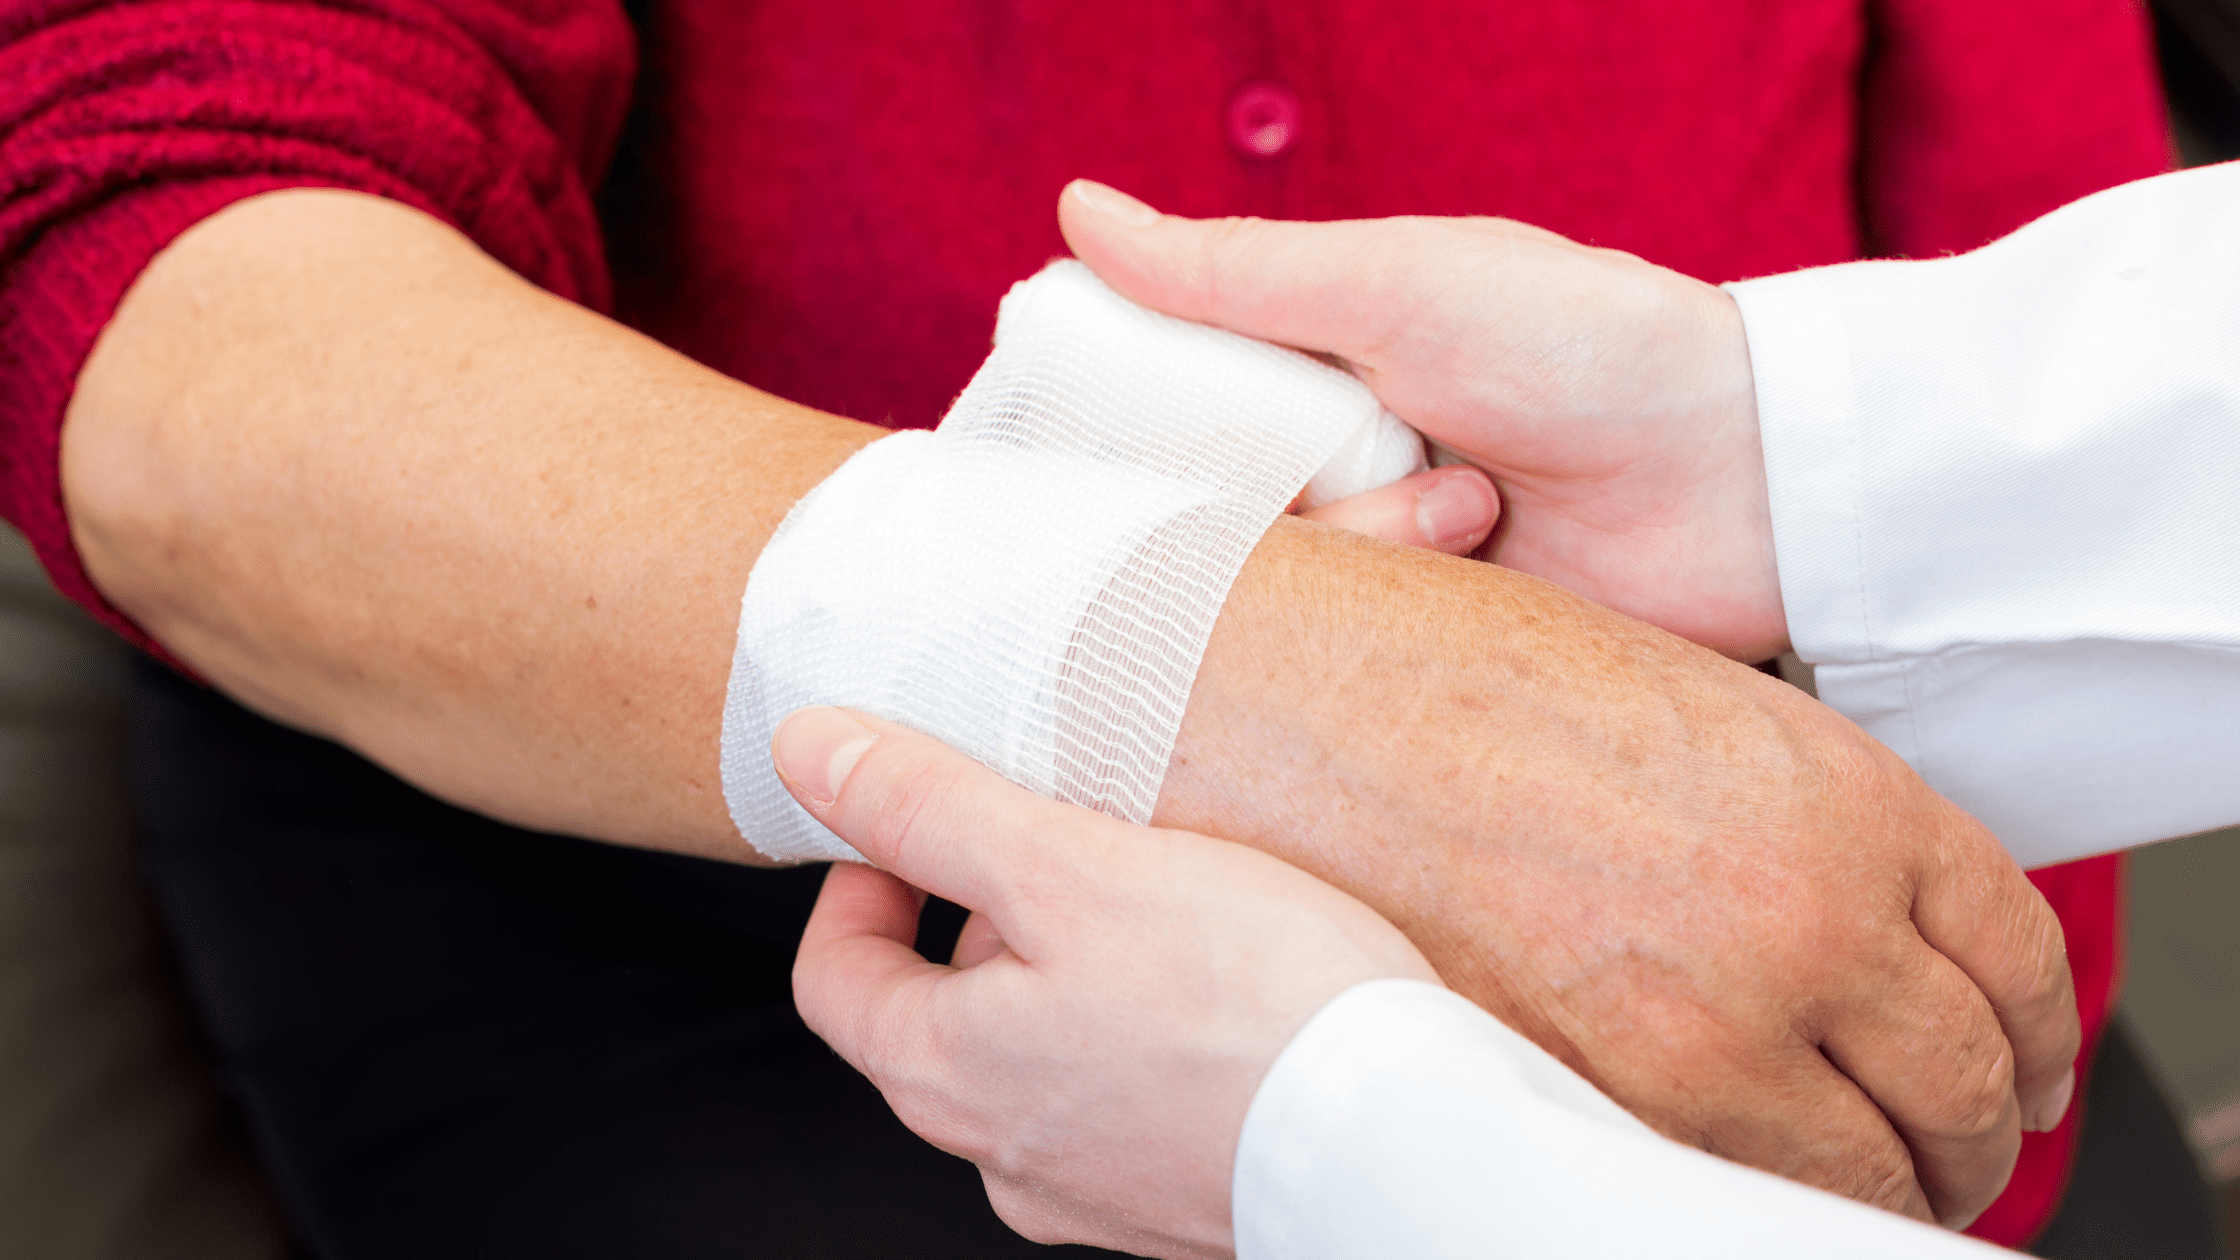 Applying bandage on wrist